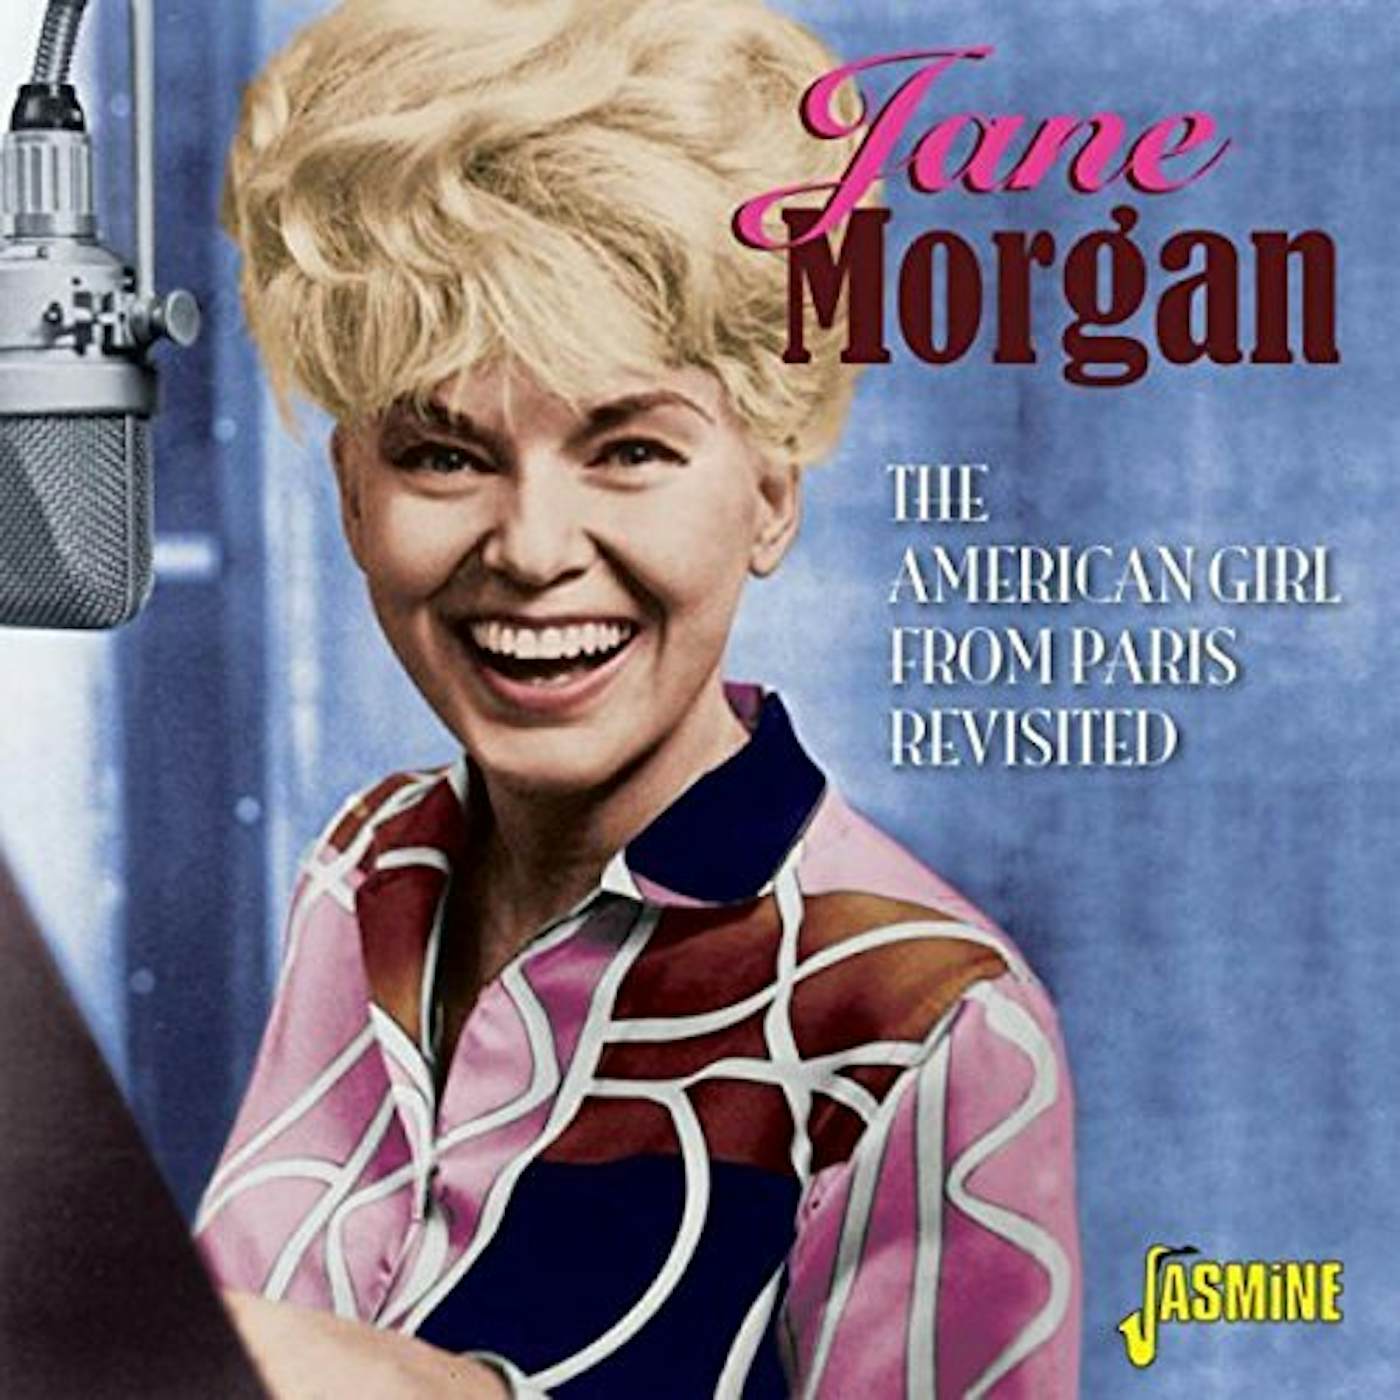 Jane Morgan AMERICAN GIRL FROM PARIS REVISITED CD